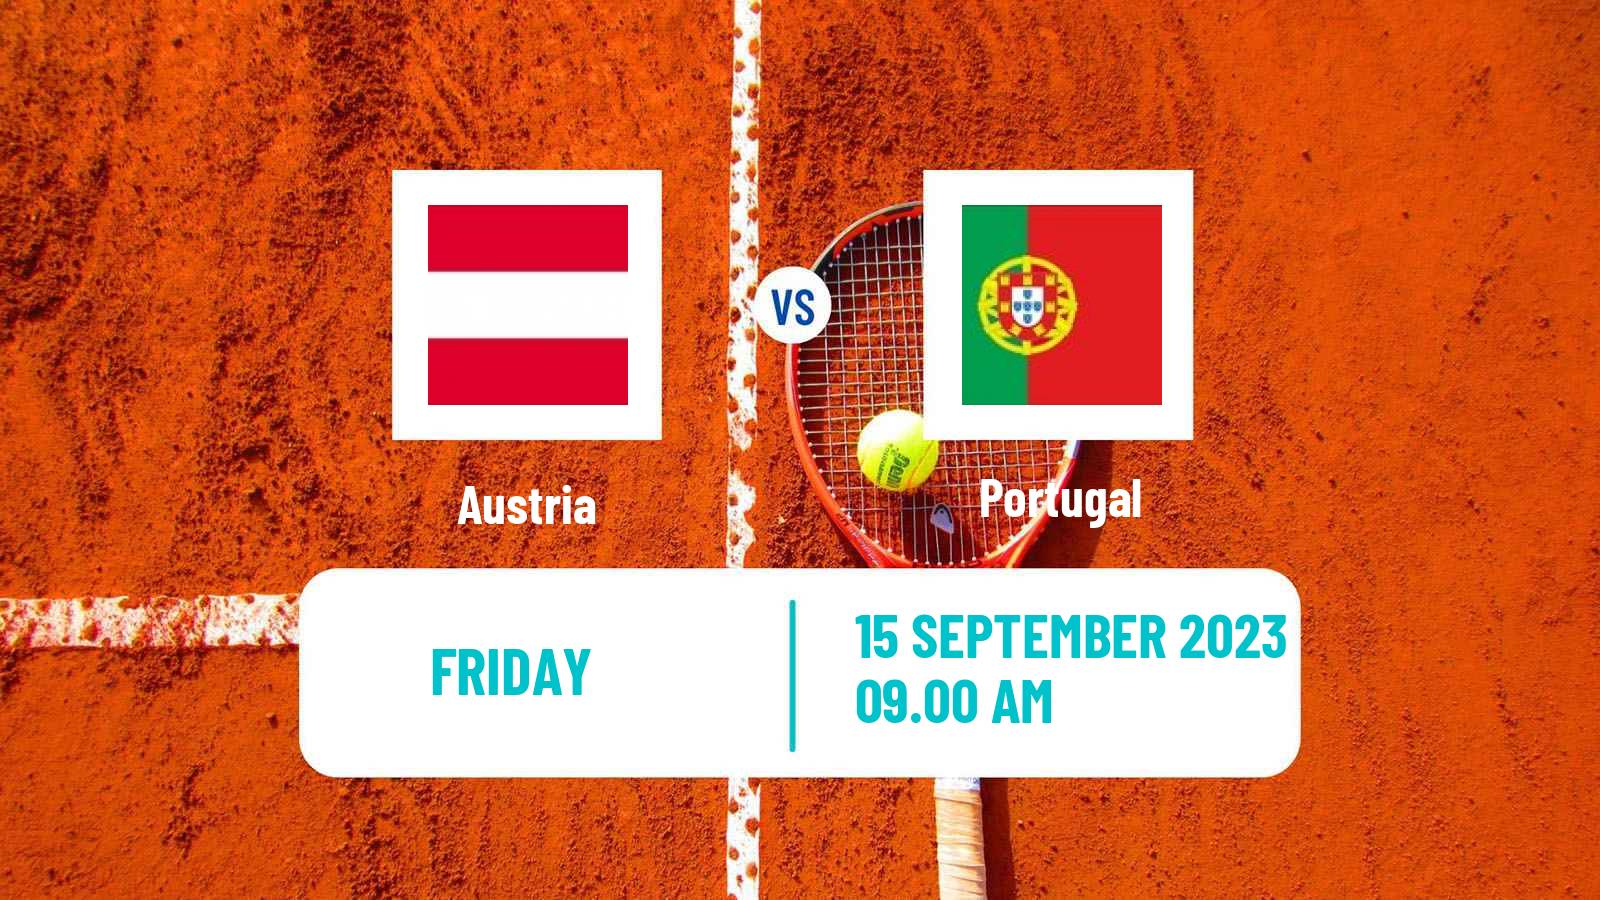 Tennis Davis Cup World Group I Teams Austria - Portugal